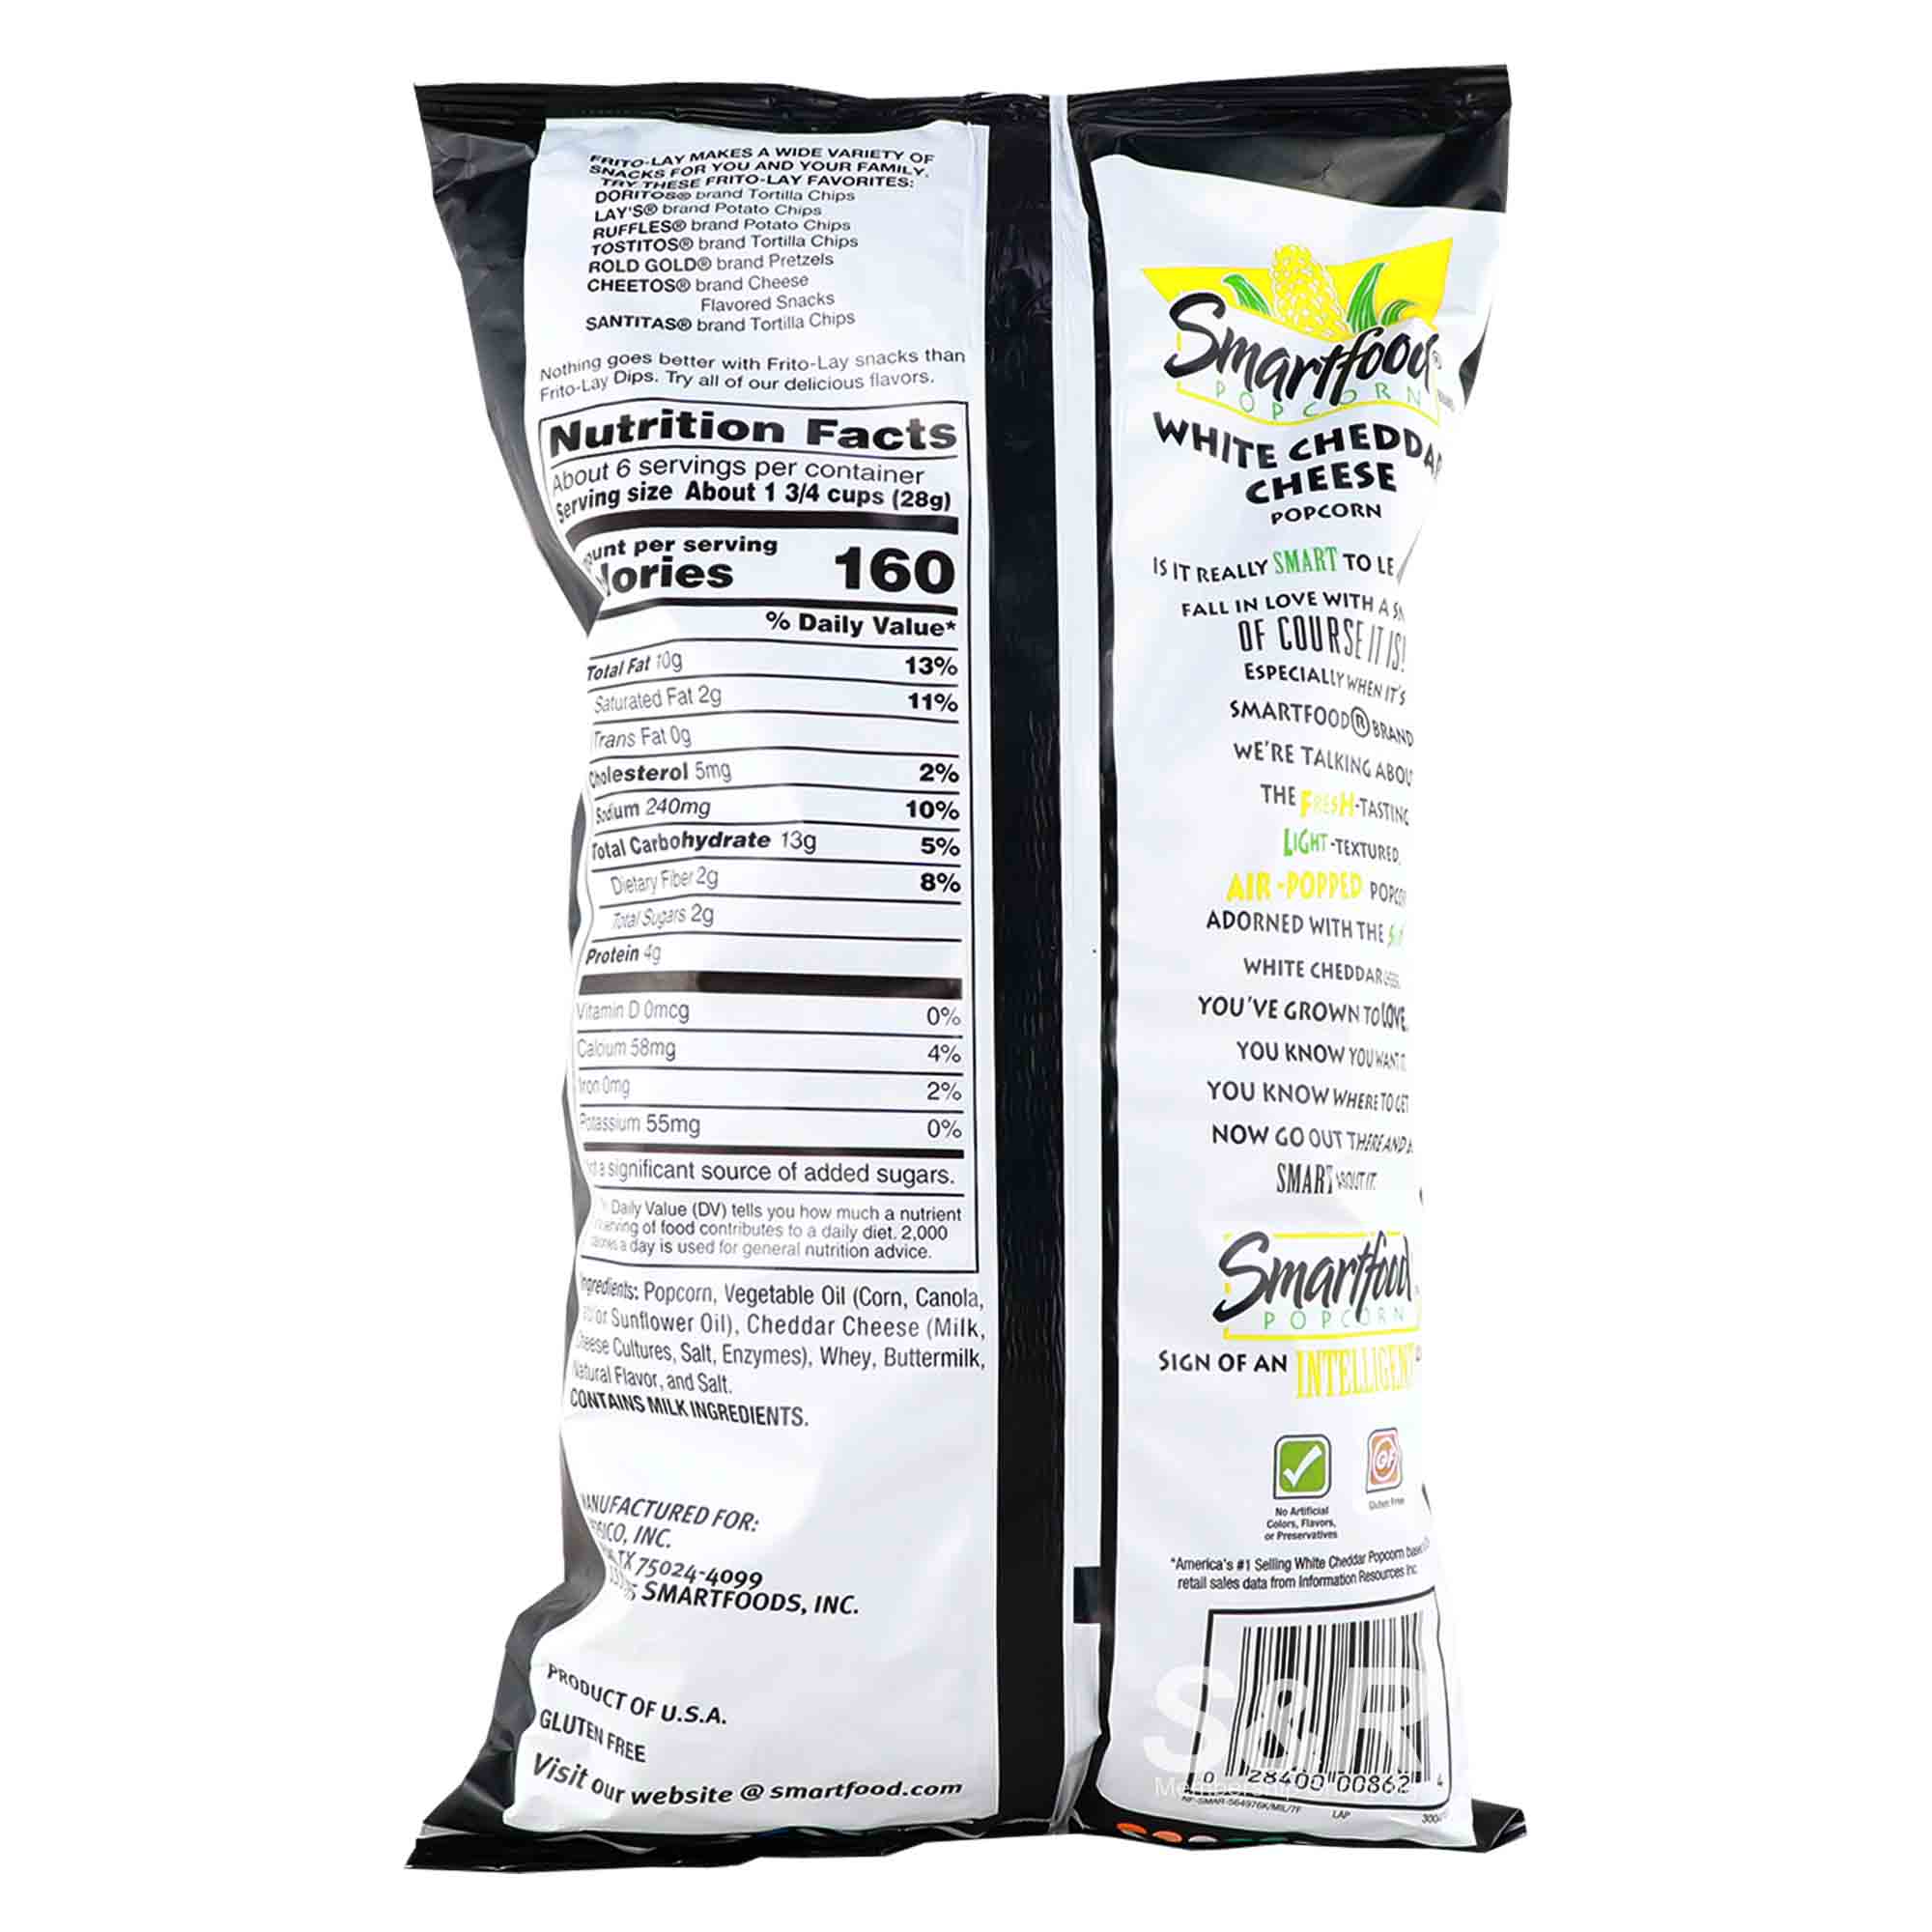 Smartfood Popcorn White Cheddar 155 9g